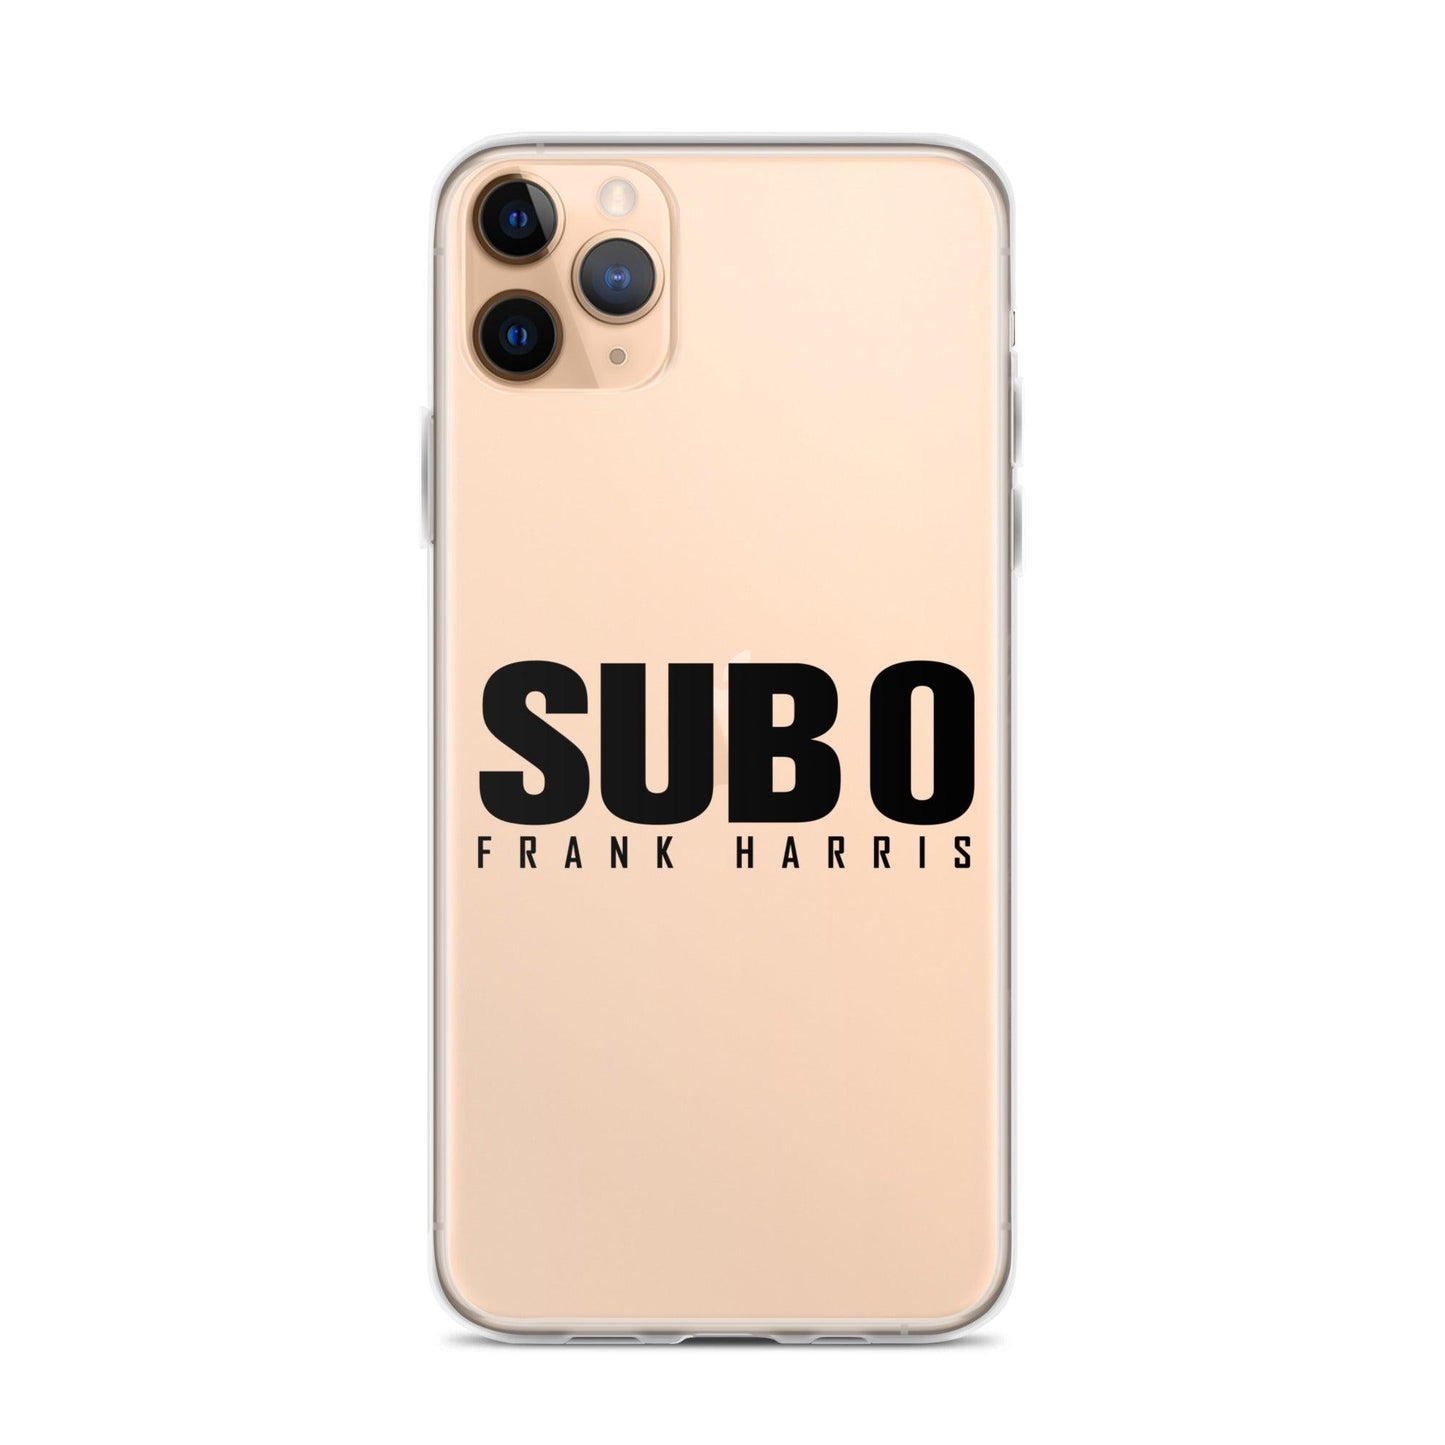 Frank Harris "Sub 0" iPhone Case - Fan Arch